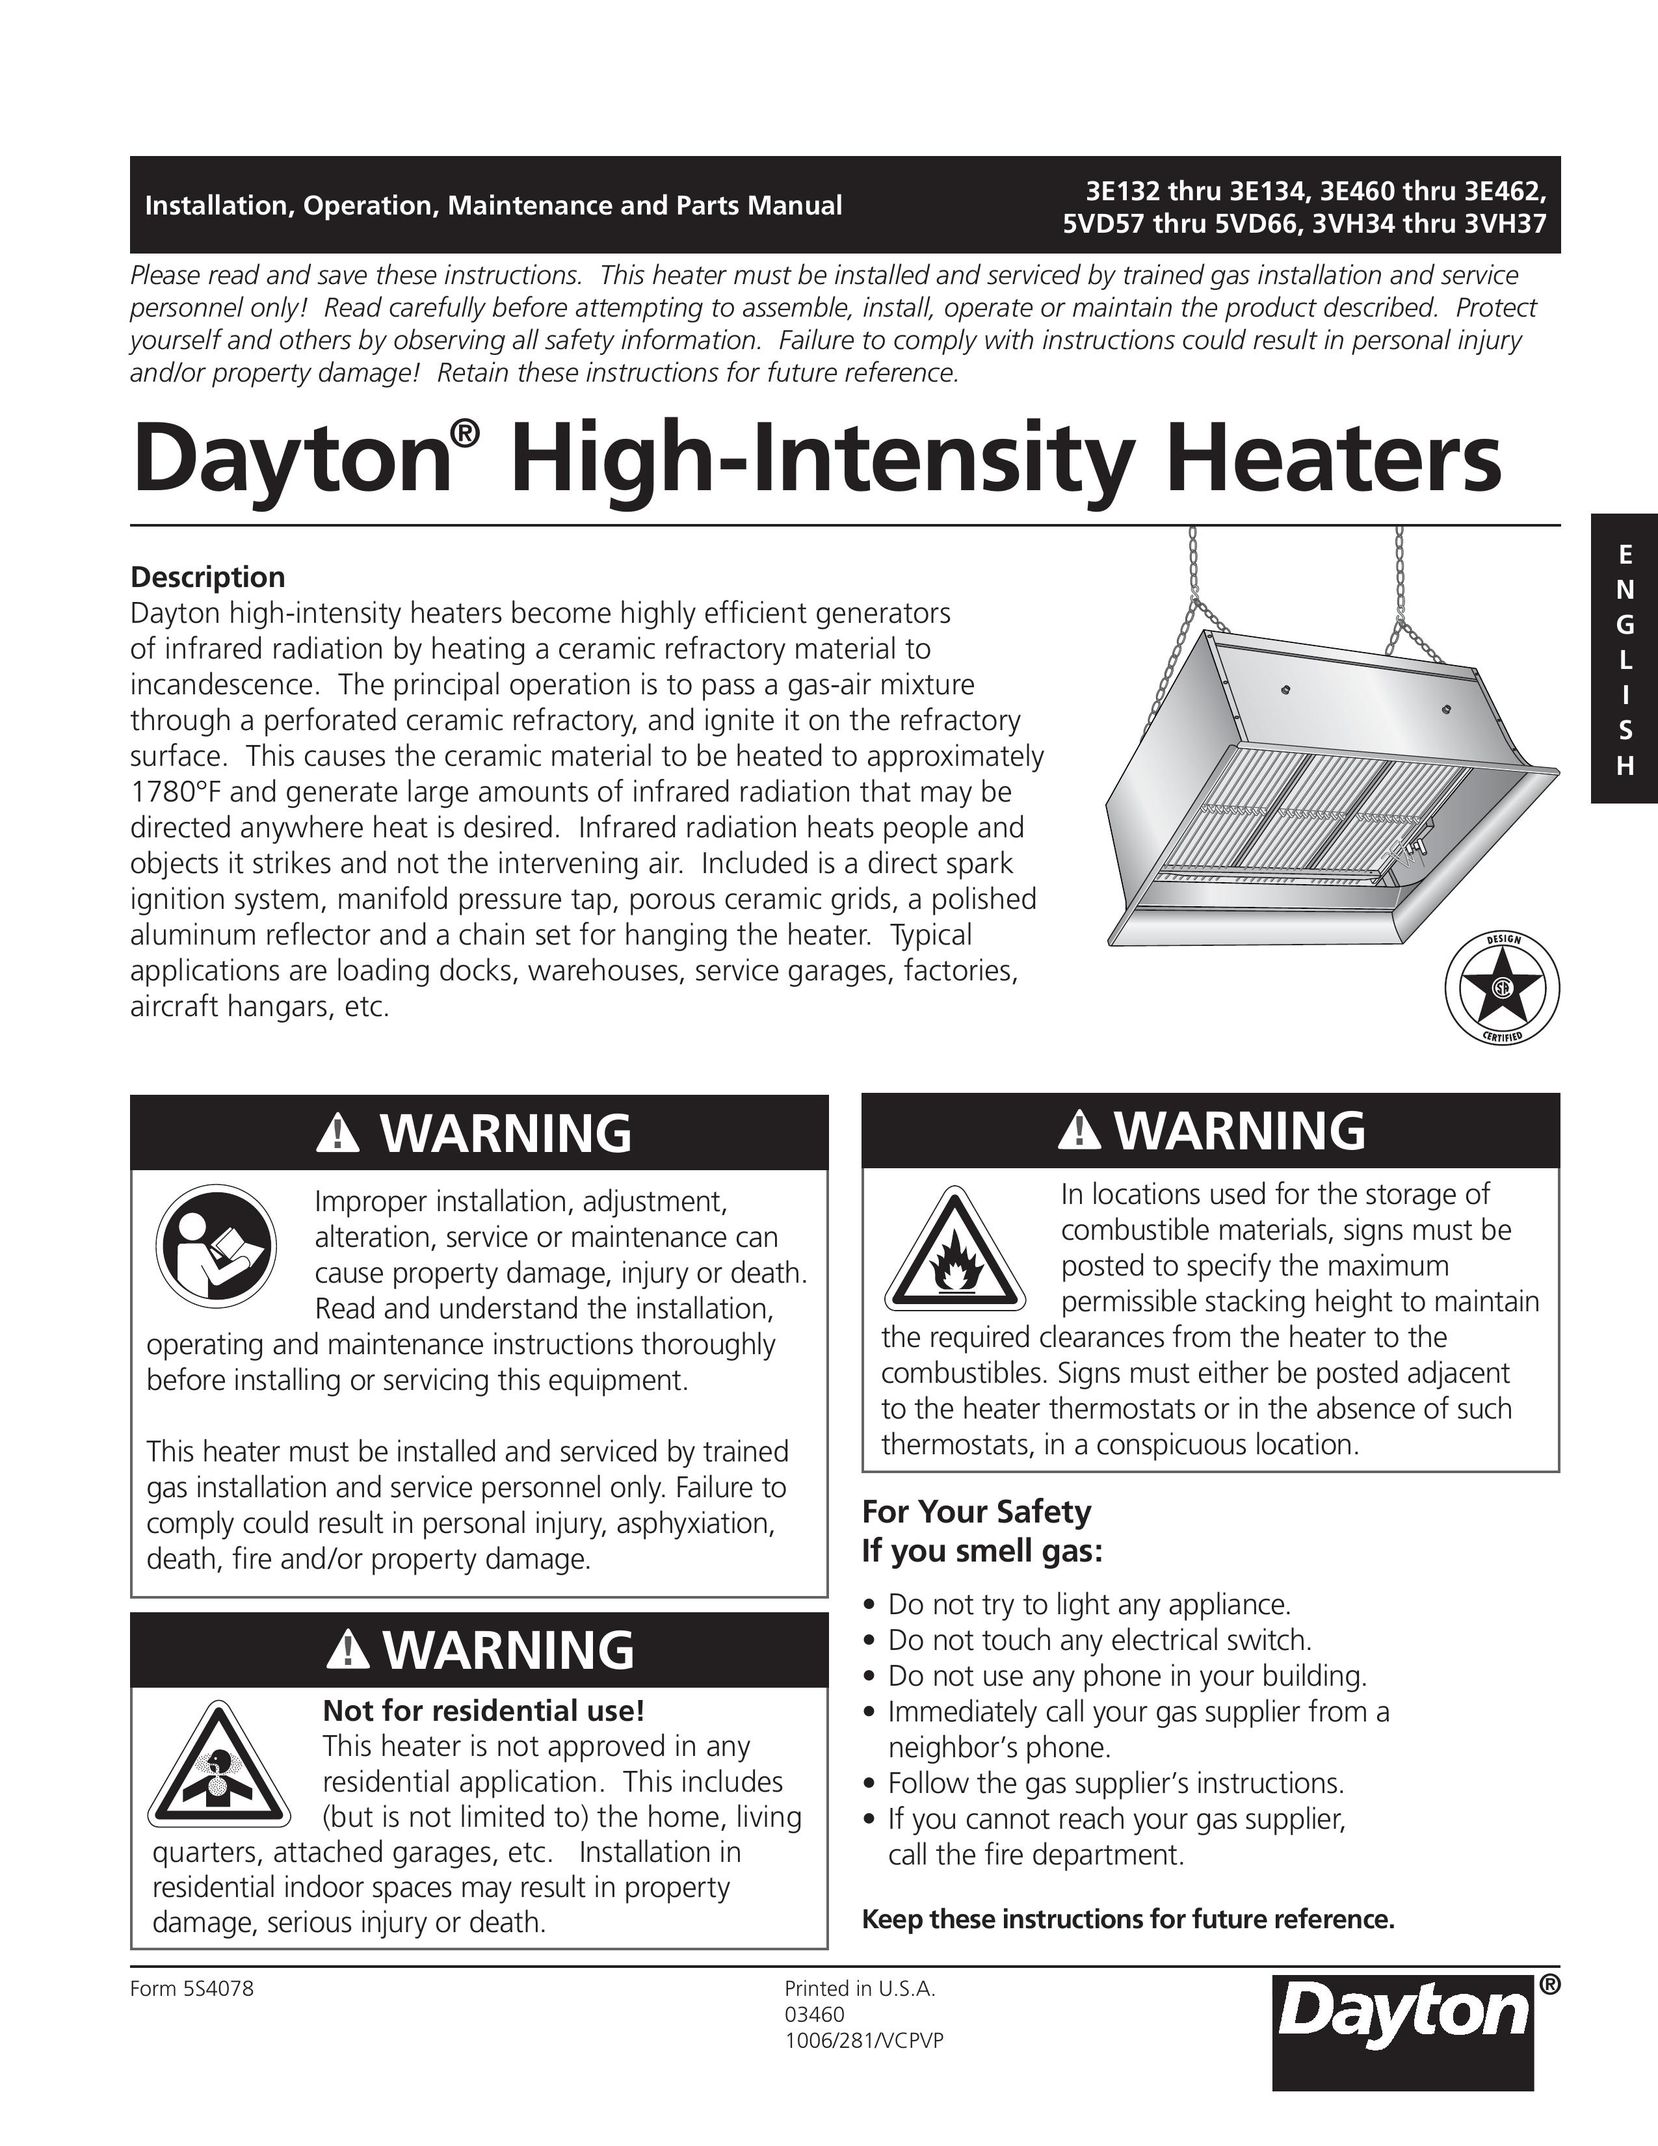 Dayton 3VH37 Electric Heater User Manual